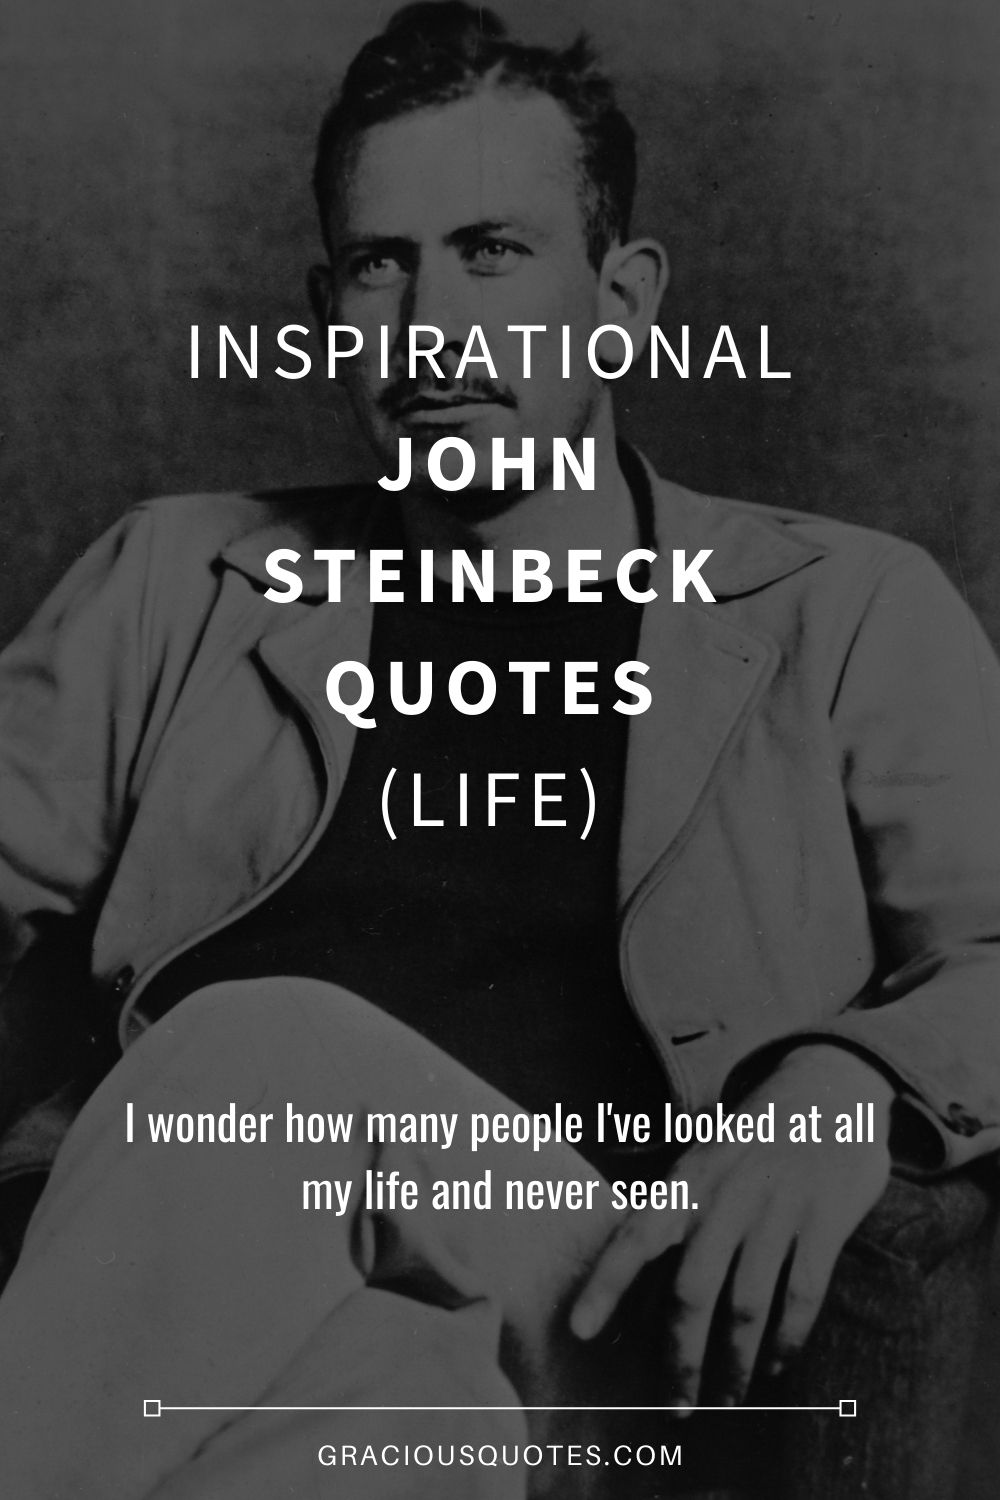 Inspirational John Steinbeck Quotes (LIFE) - Gracious Quotes